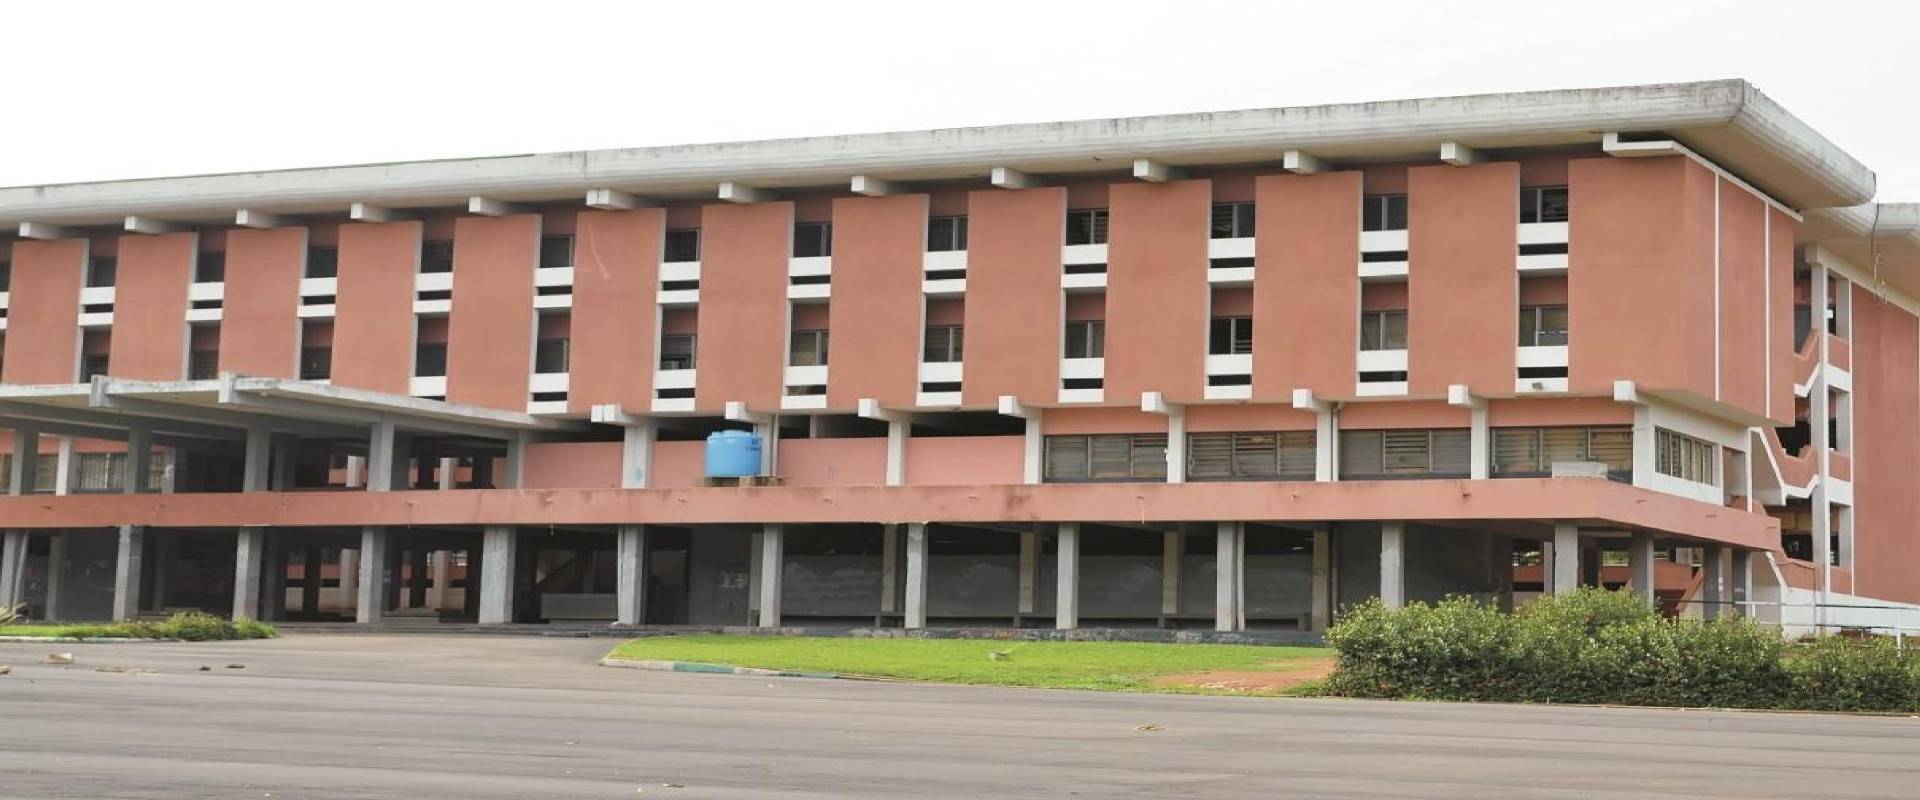 Kwara State Polytechnic, Kwara - Hotels.ng Places